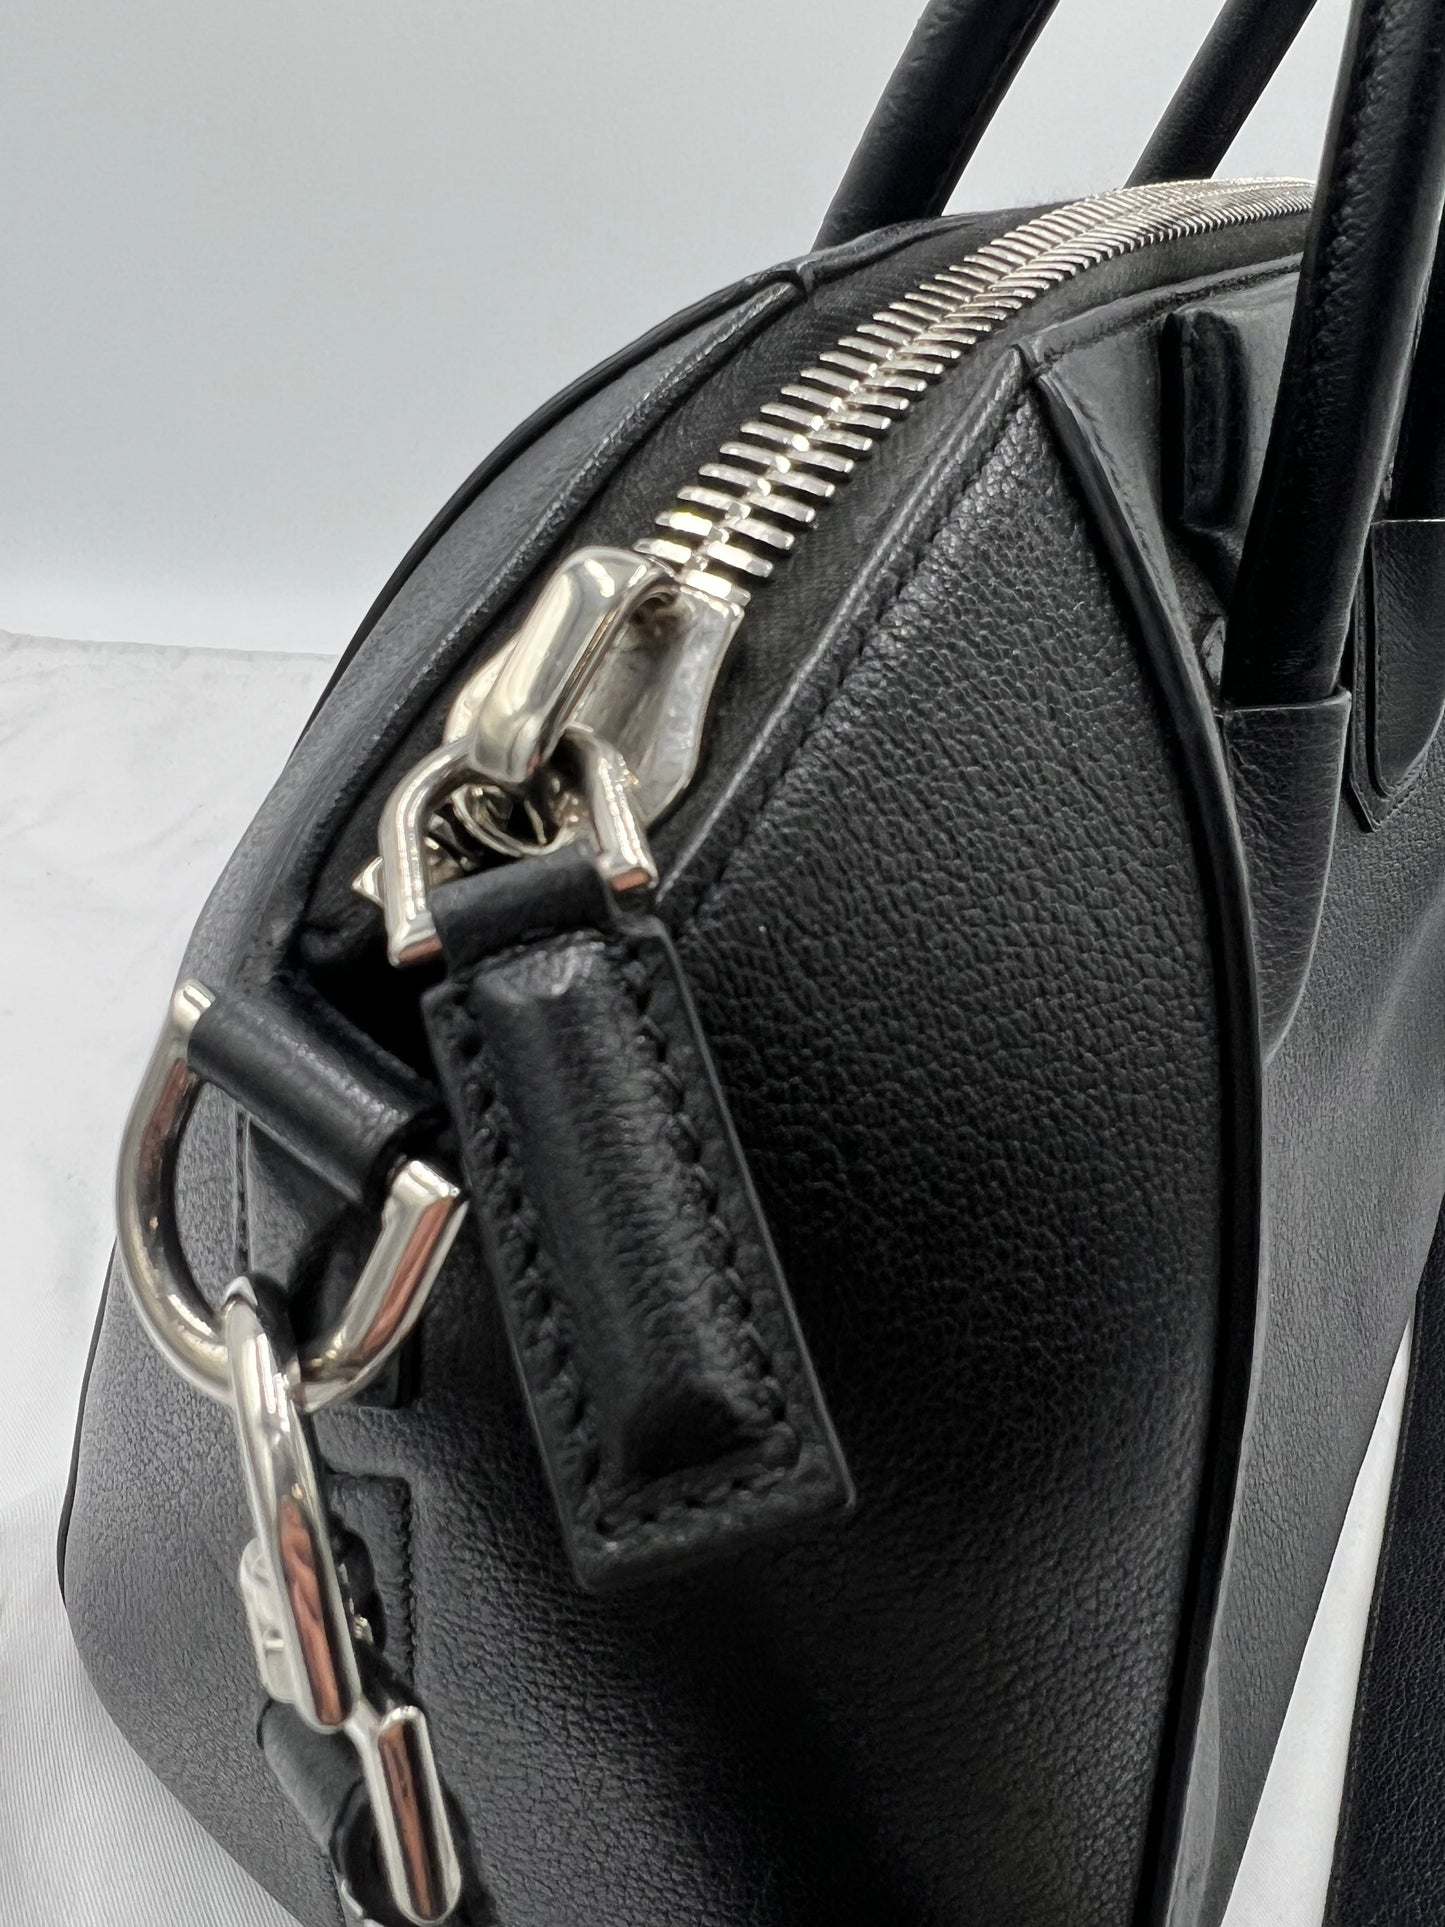 Givenchy Medium Antigona Bag in Grained Leather